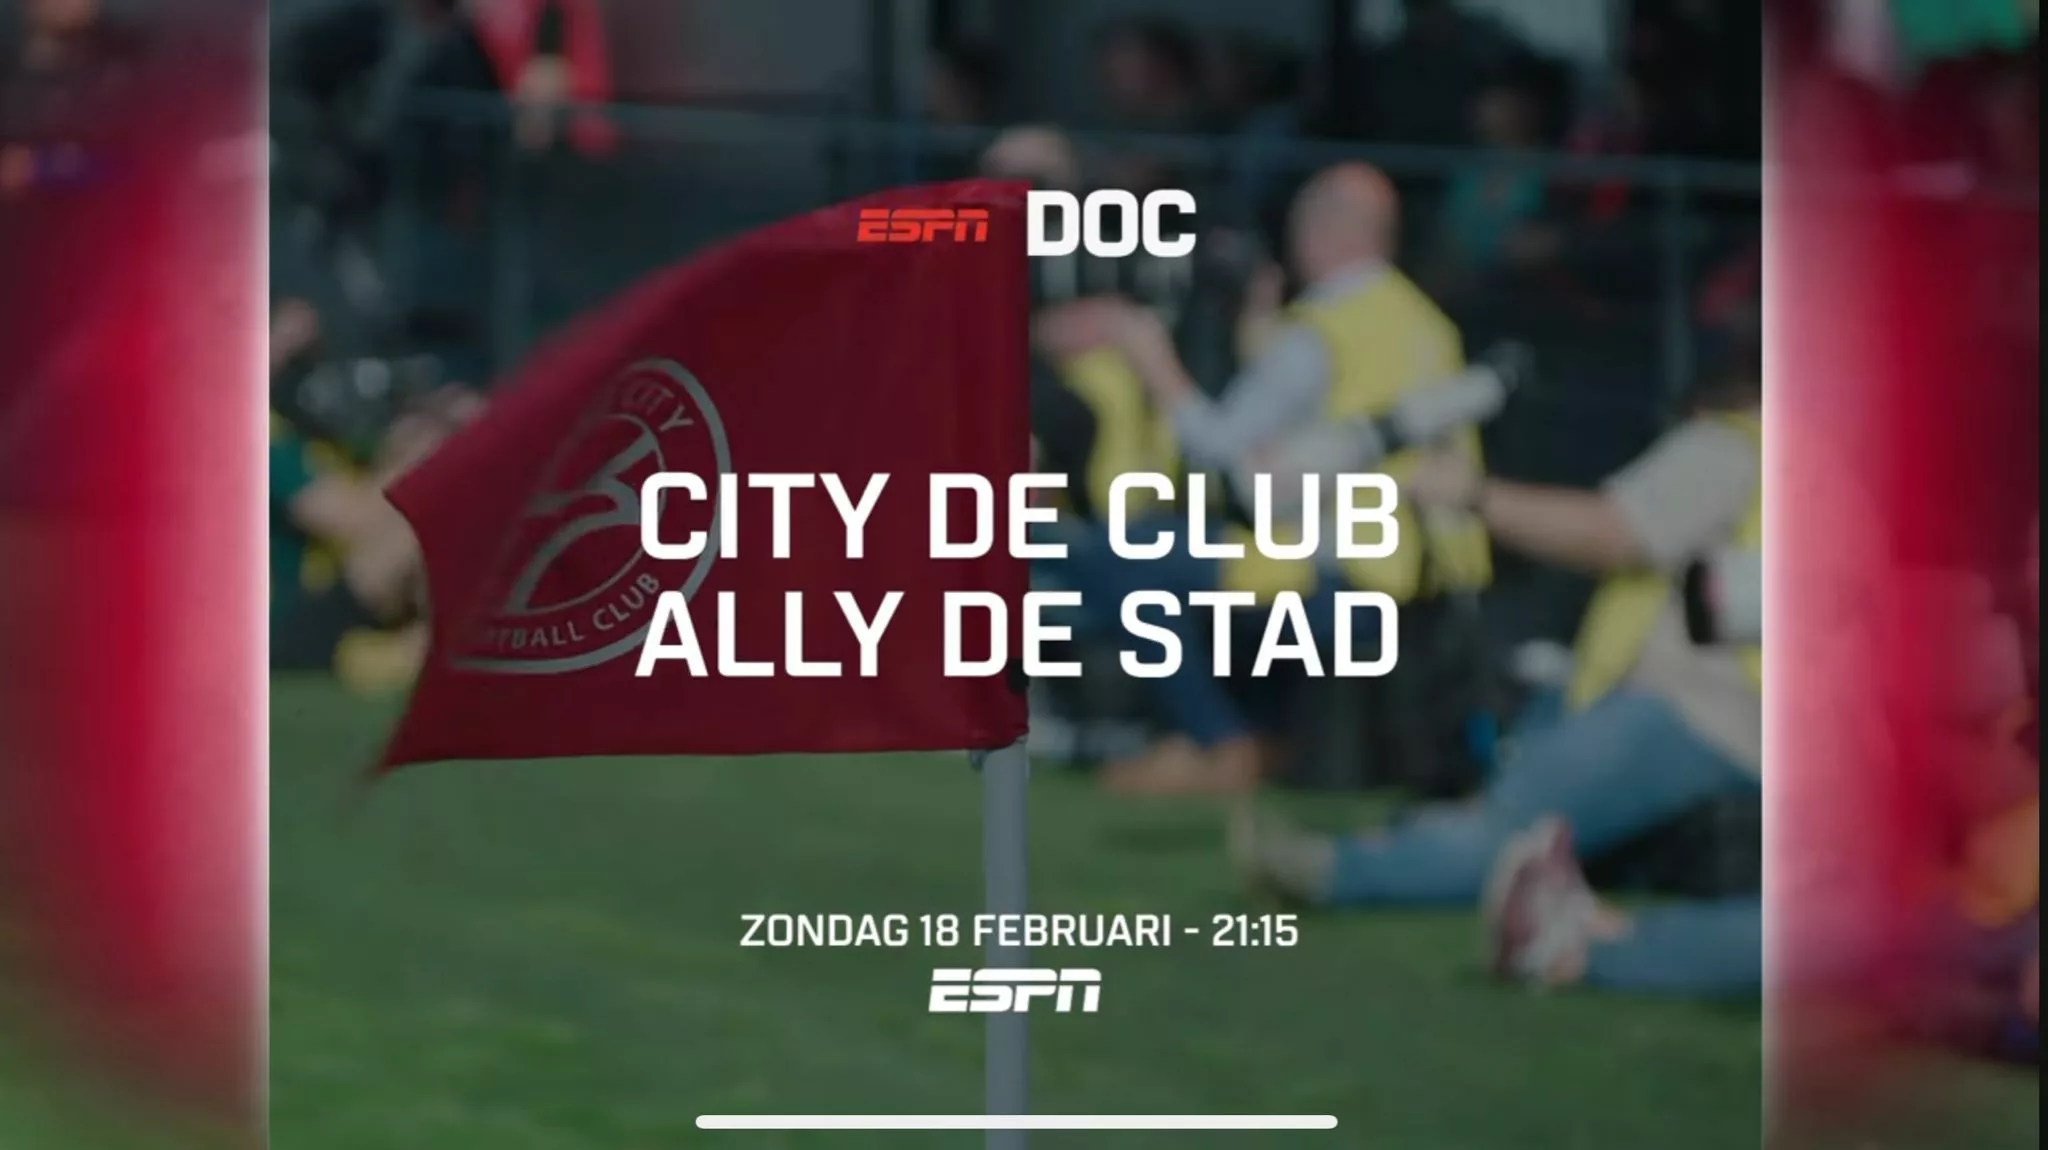 Zondag 18 februari première van ESPN documentaire: City de Club, Ally de stad